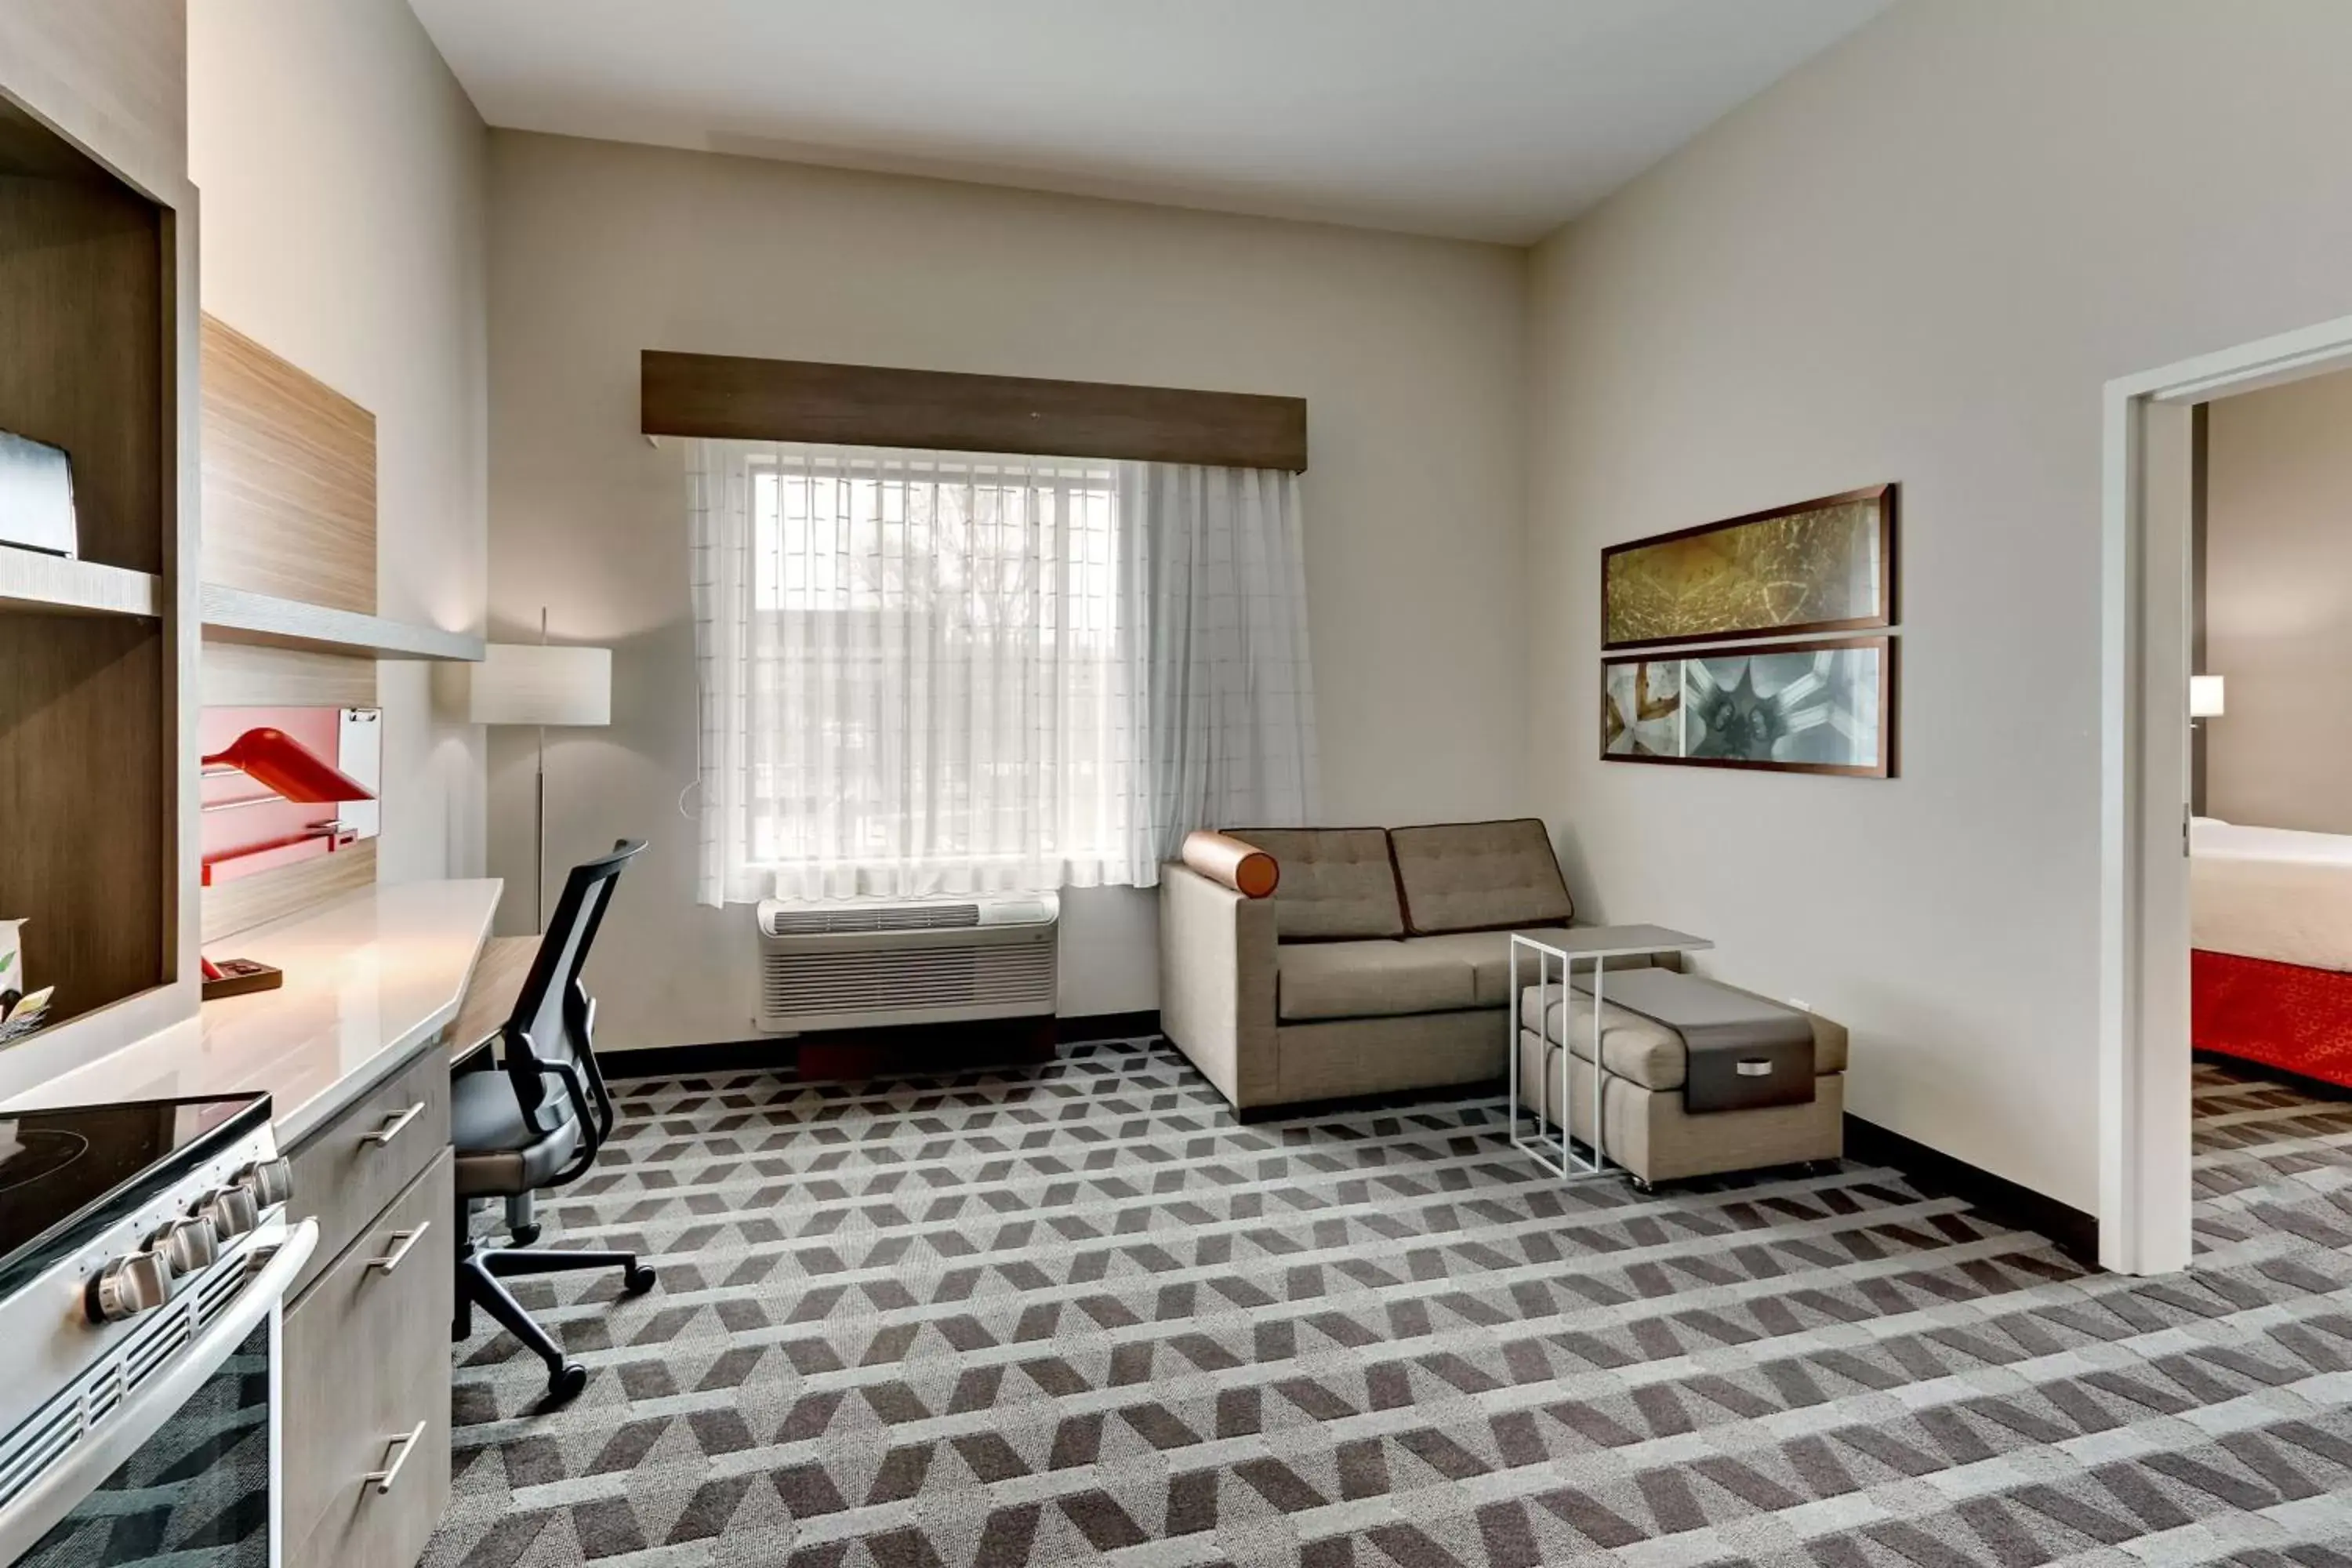 Bedroom in TownePlace Suites by Marriott Houston Northwest Beltway 8